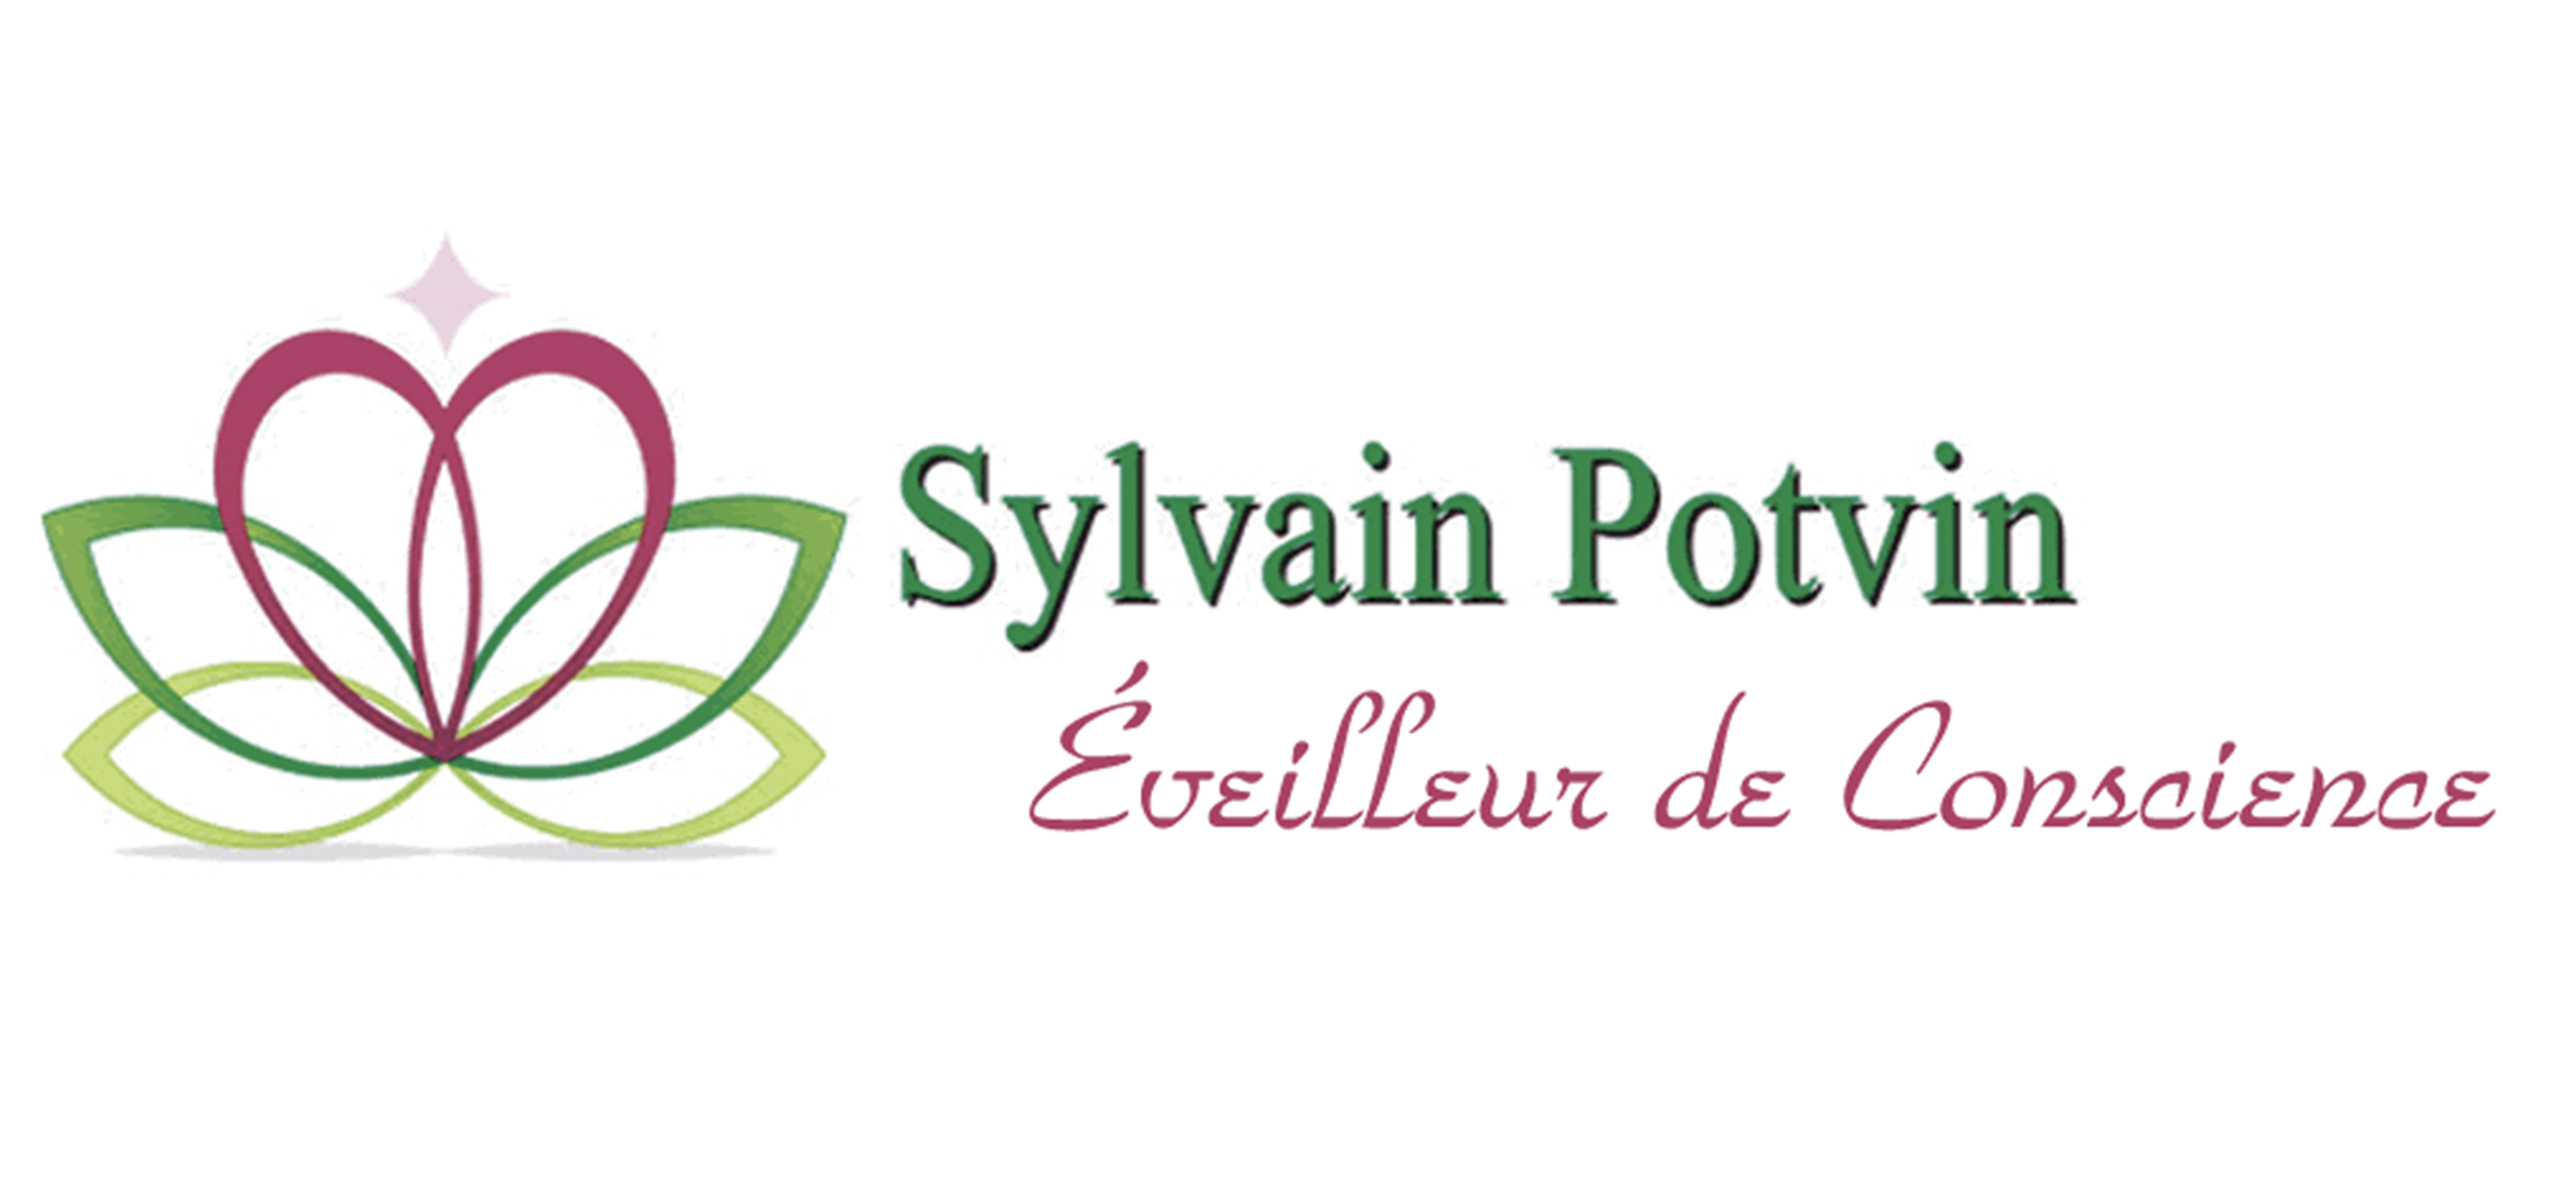 Sylvain Potvin